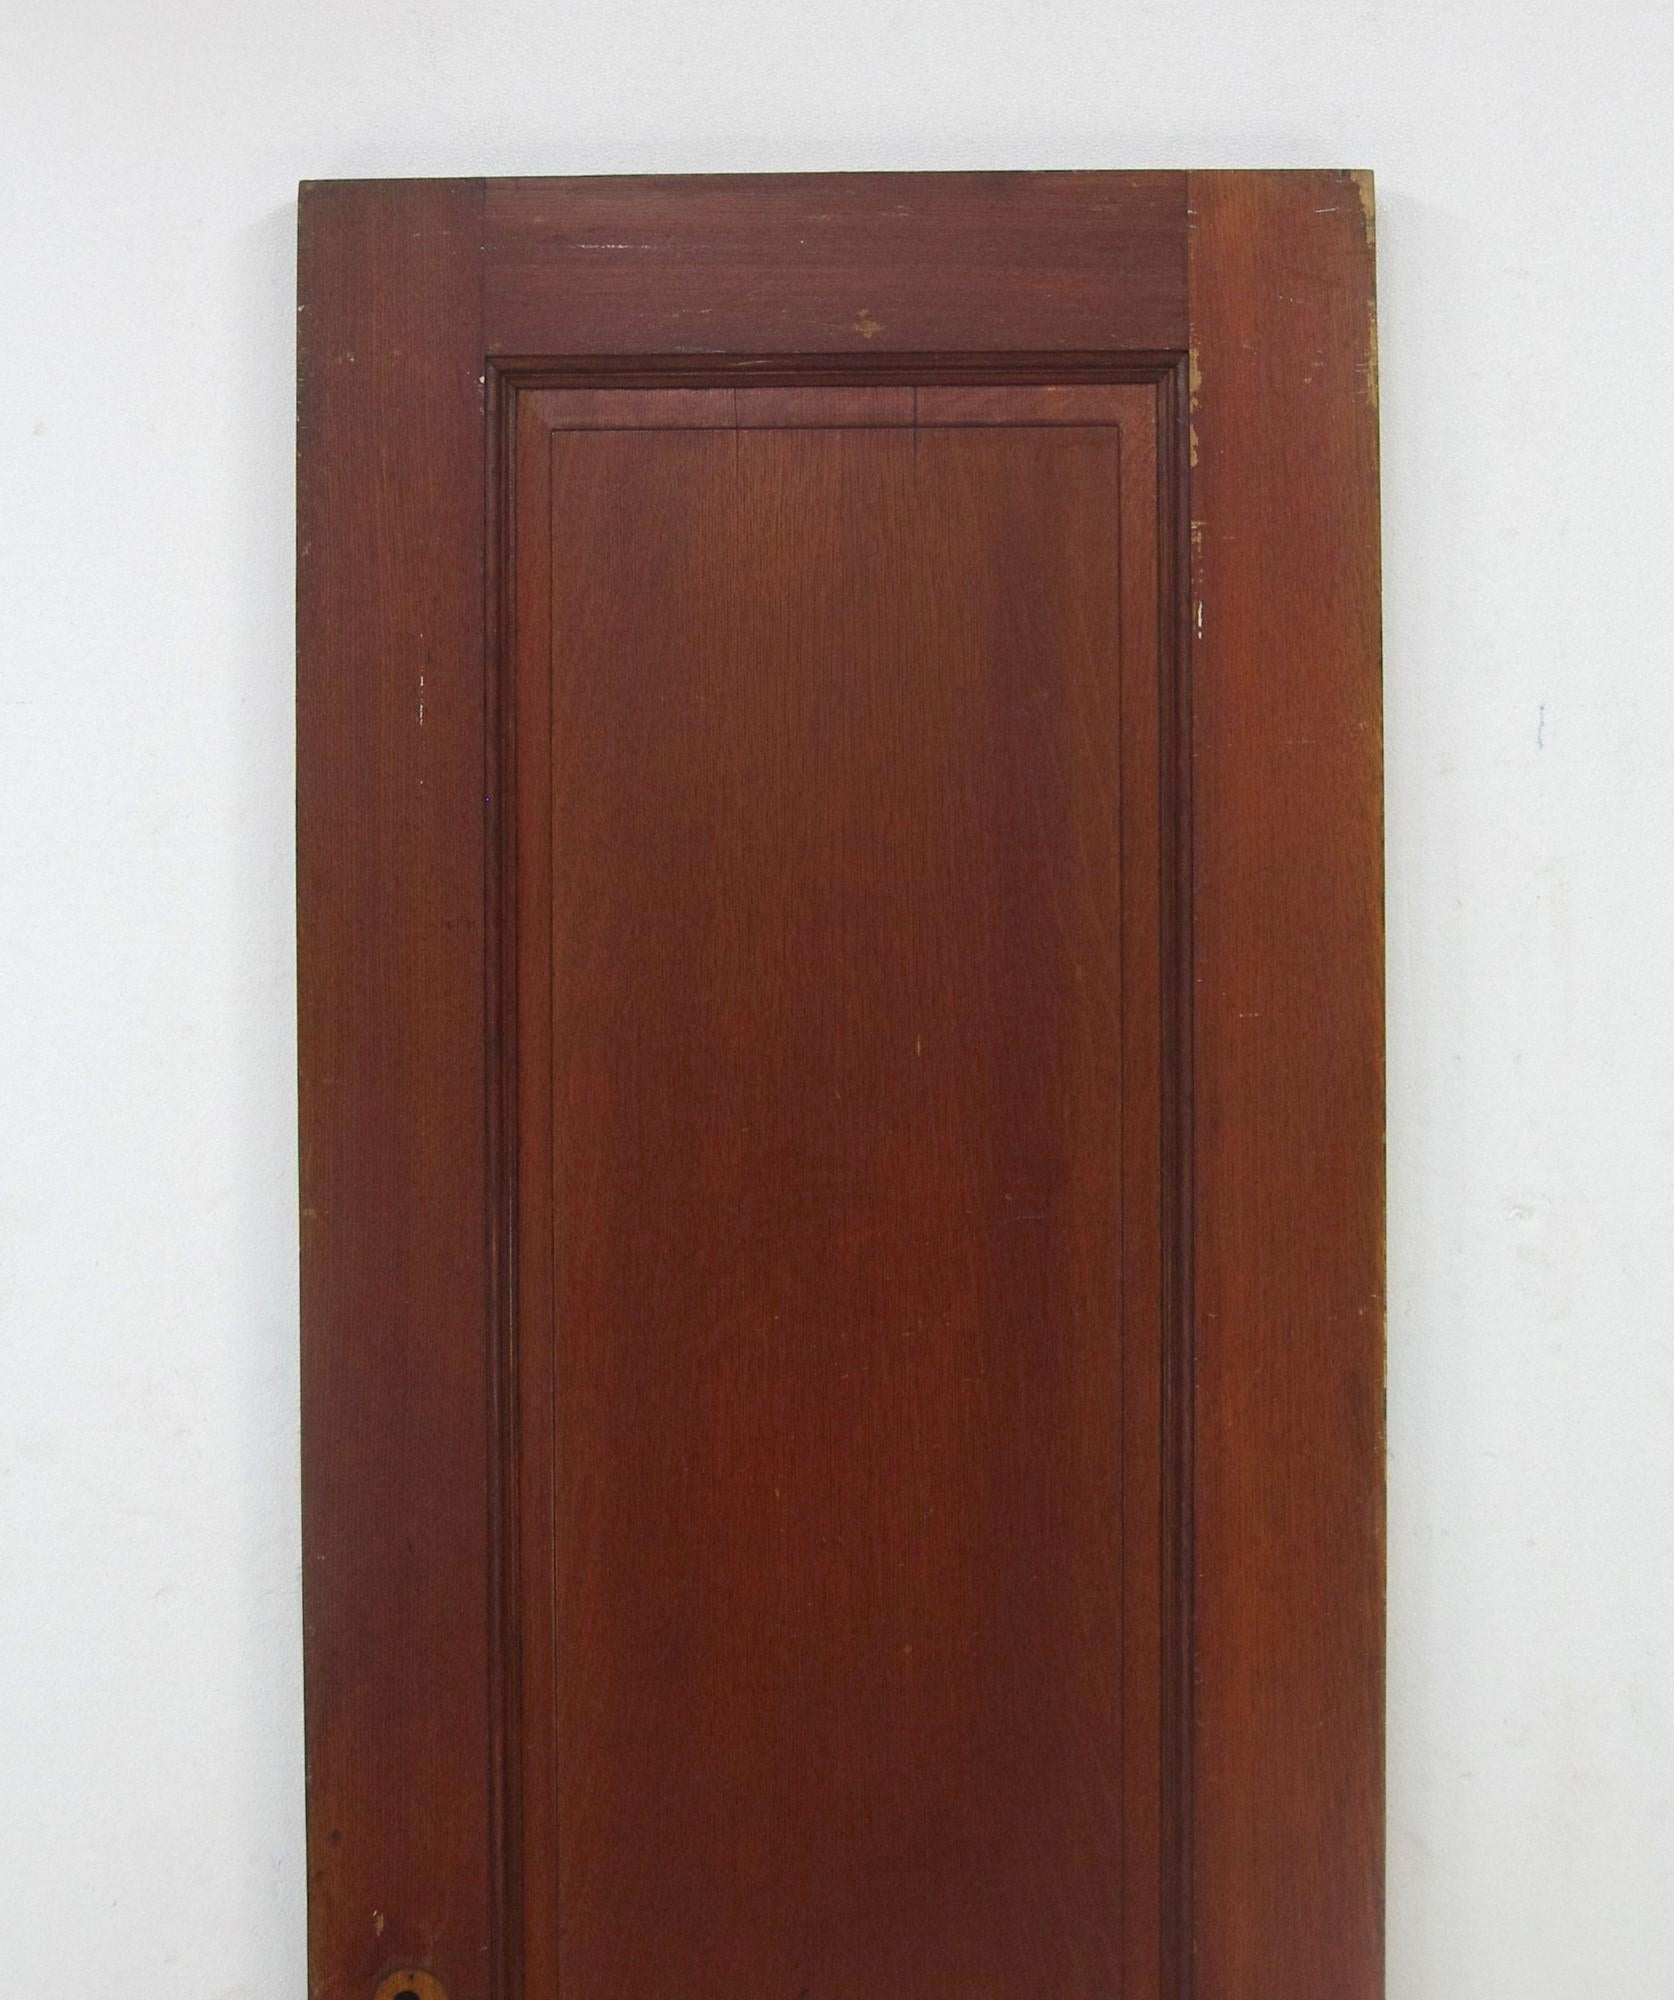 American Antique 2 Panel Quarter Sawn Oak Door in a Dark Tone